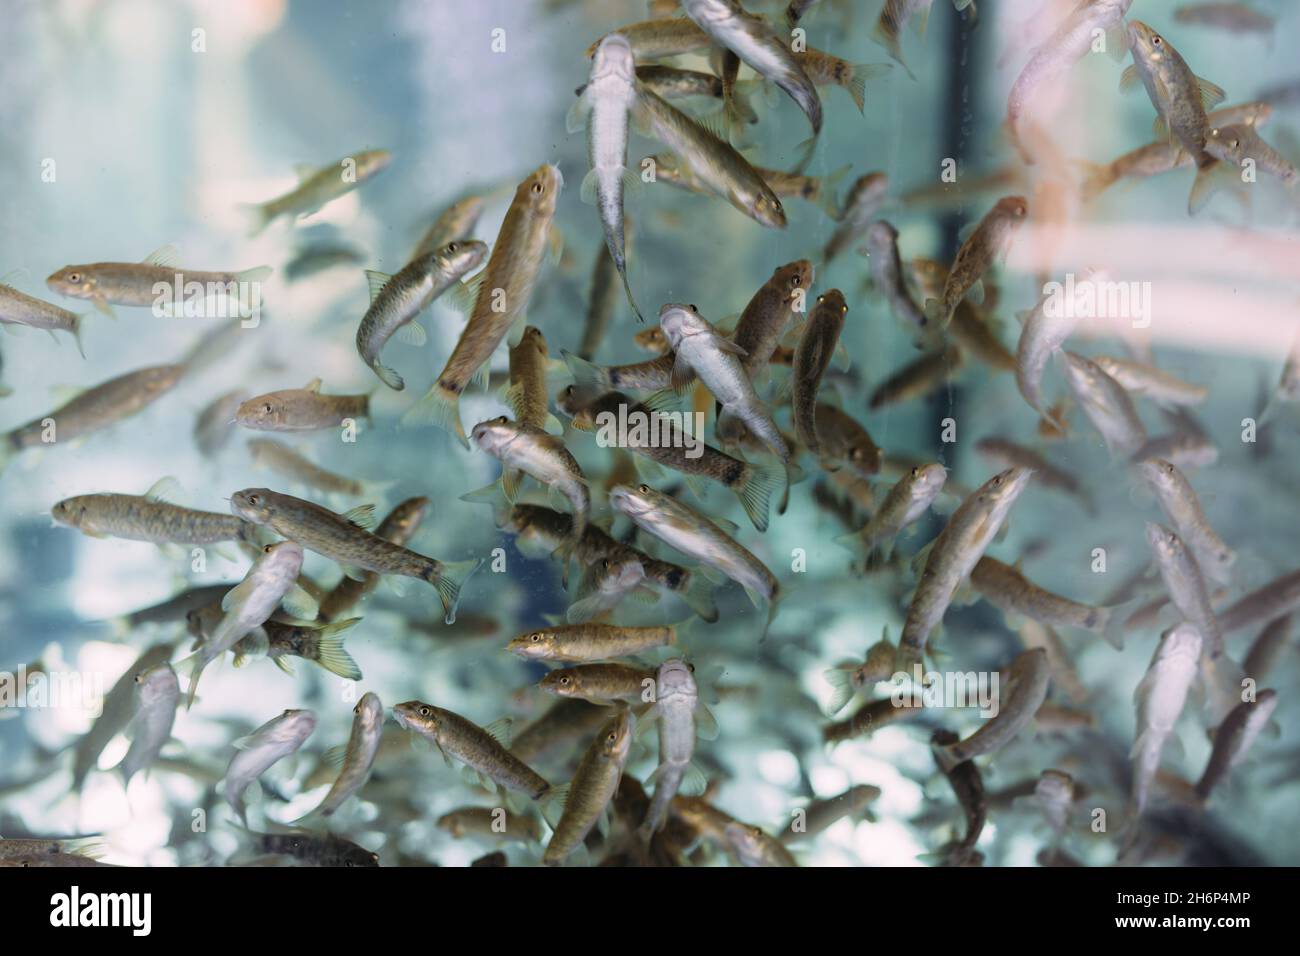 Lots of small garra rufa fish in a fish pilling aquarium or fish spa Stock Photo